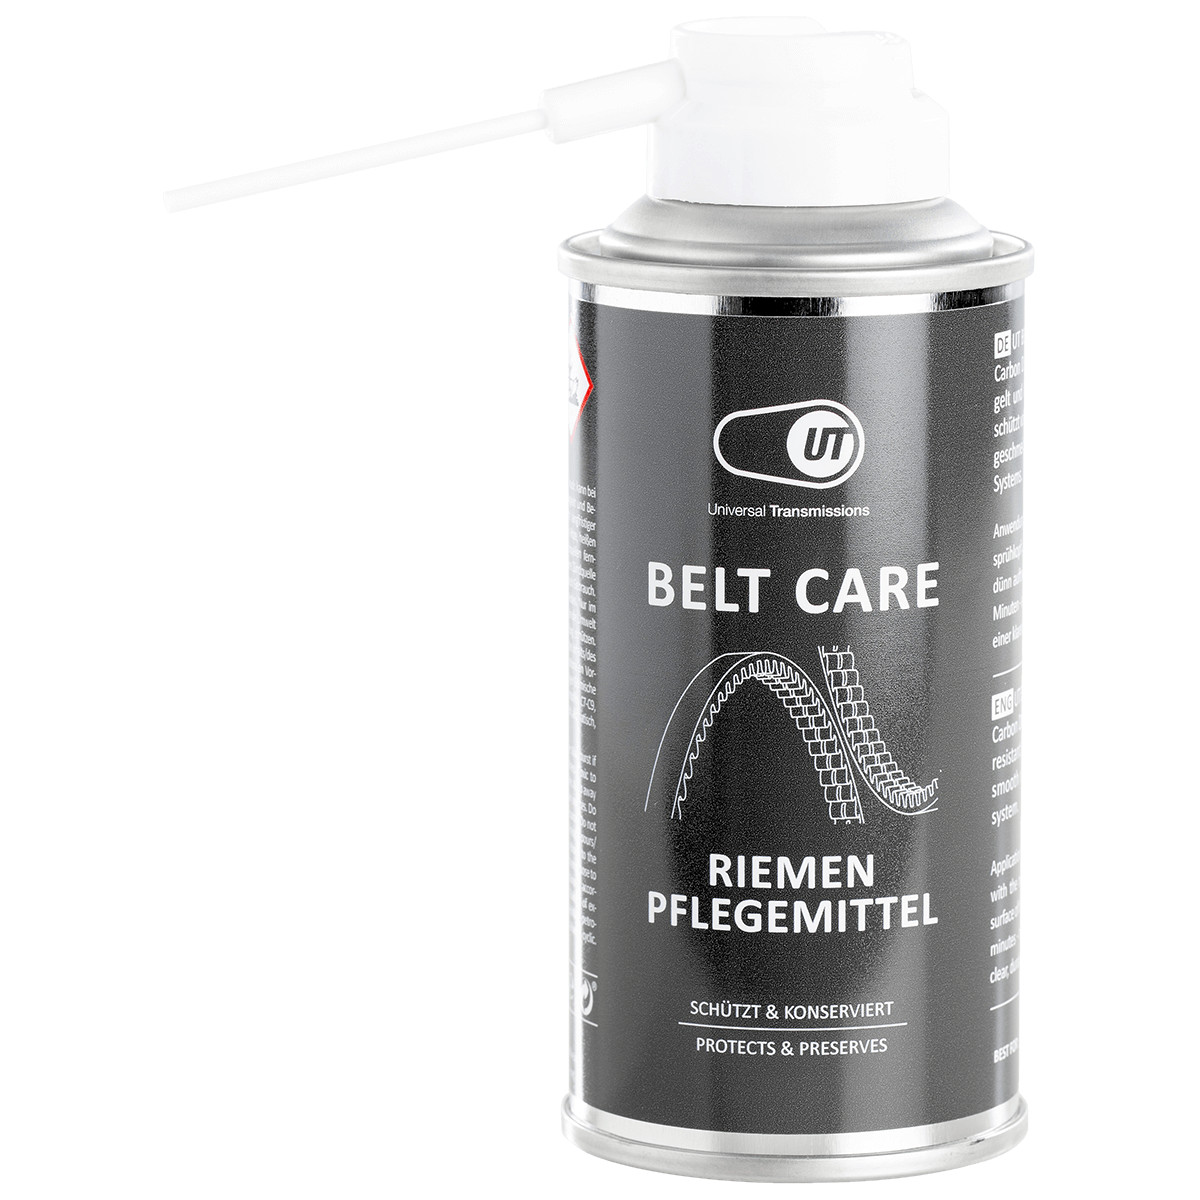 Productfoto van Gates Carbon Drive Riem Verzorgingsproduct - UT Belt Care | by Universal Transmissions - 150 ml